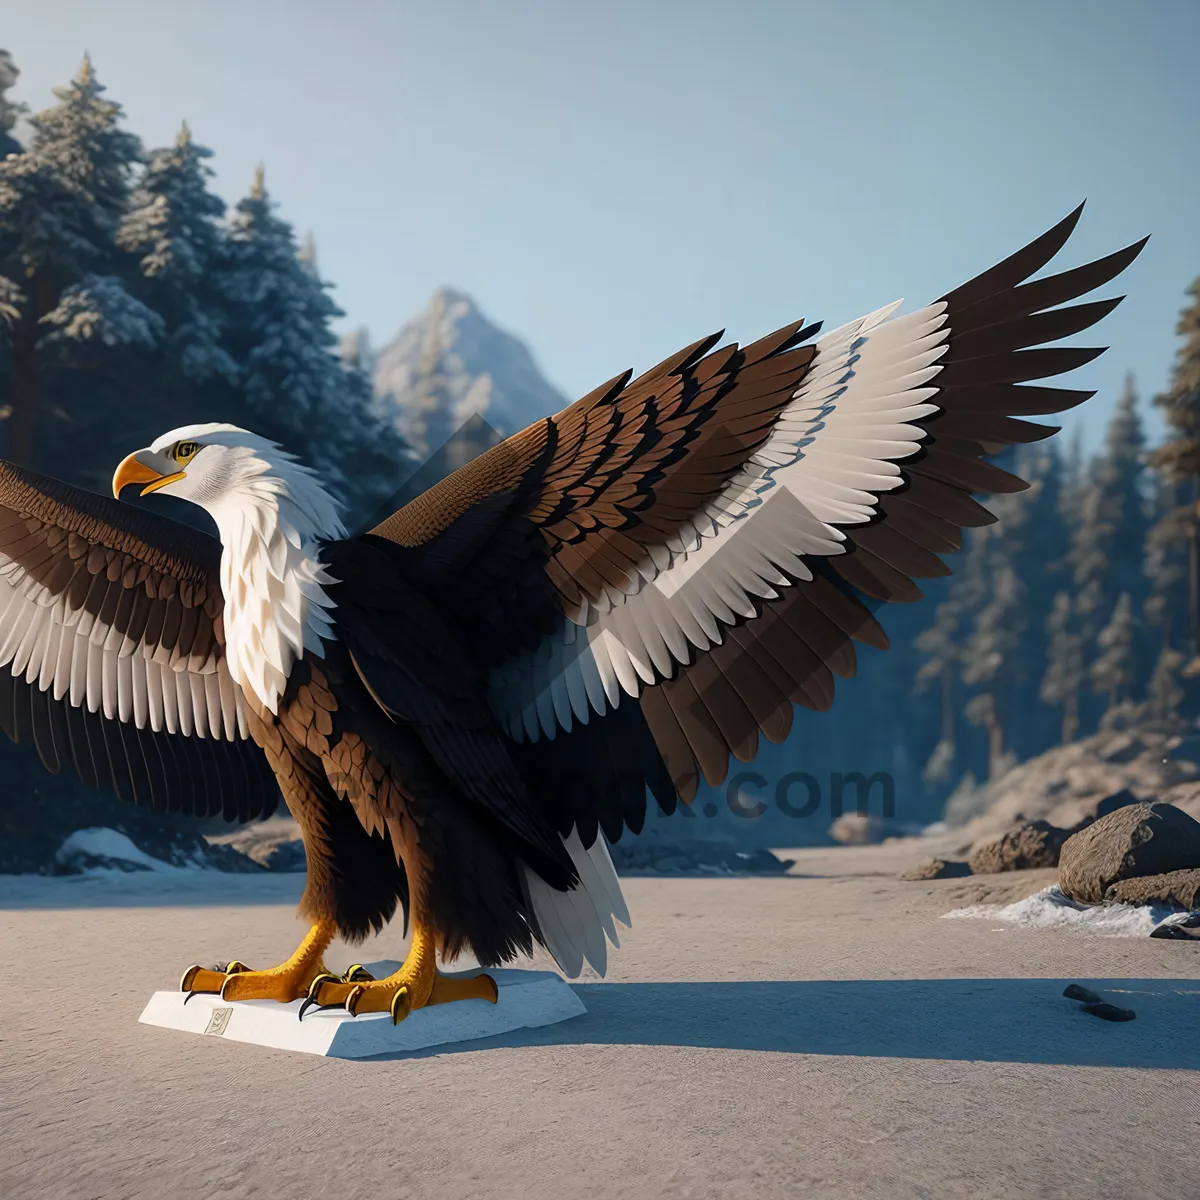 Picture of Graceful Flight: Majestic Bald Eagle Soaring Above